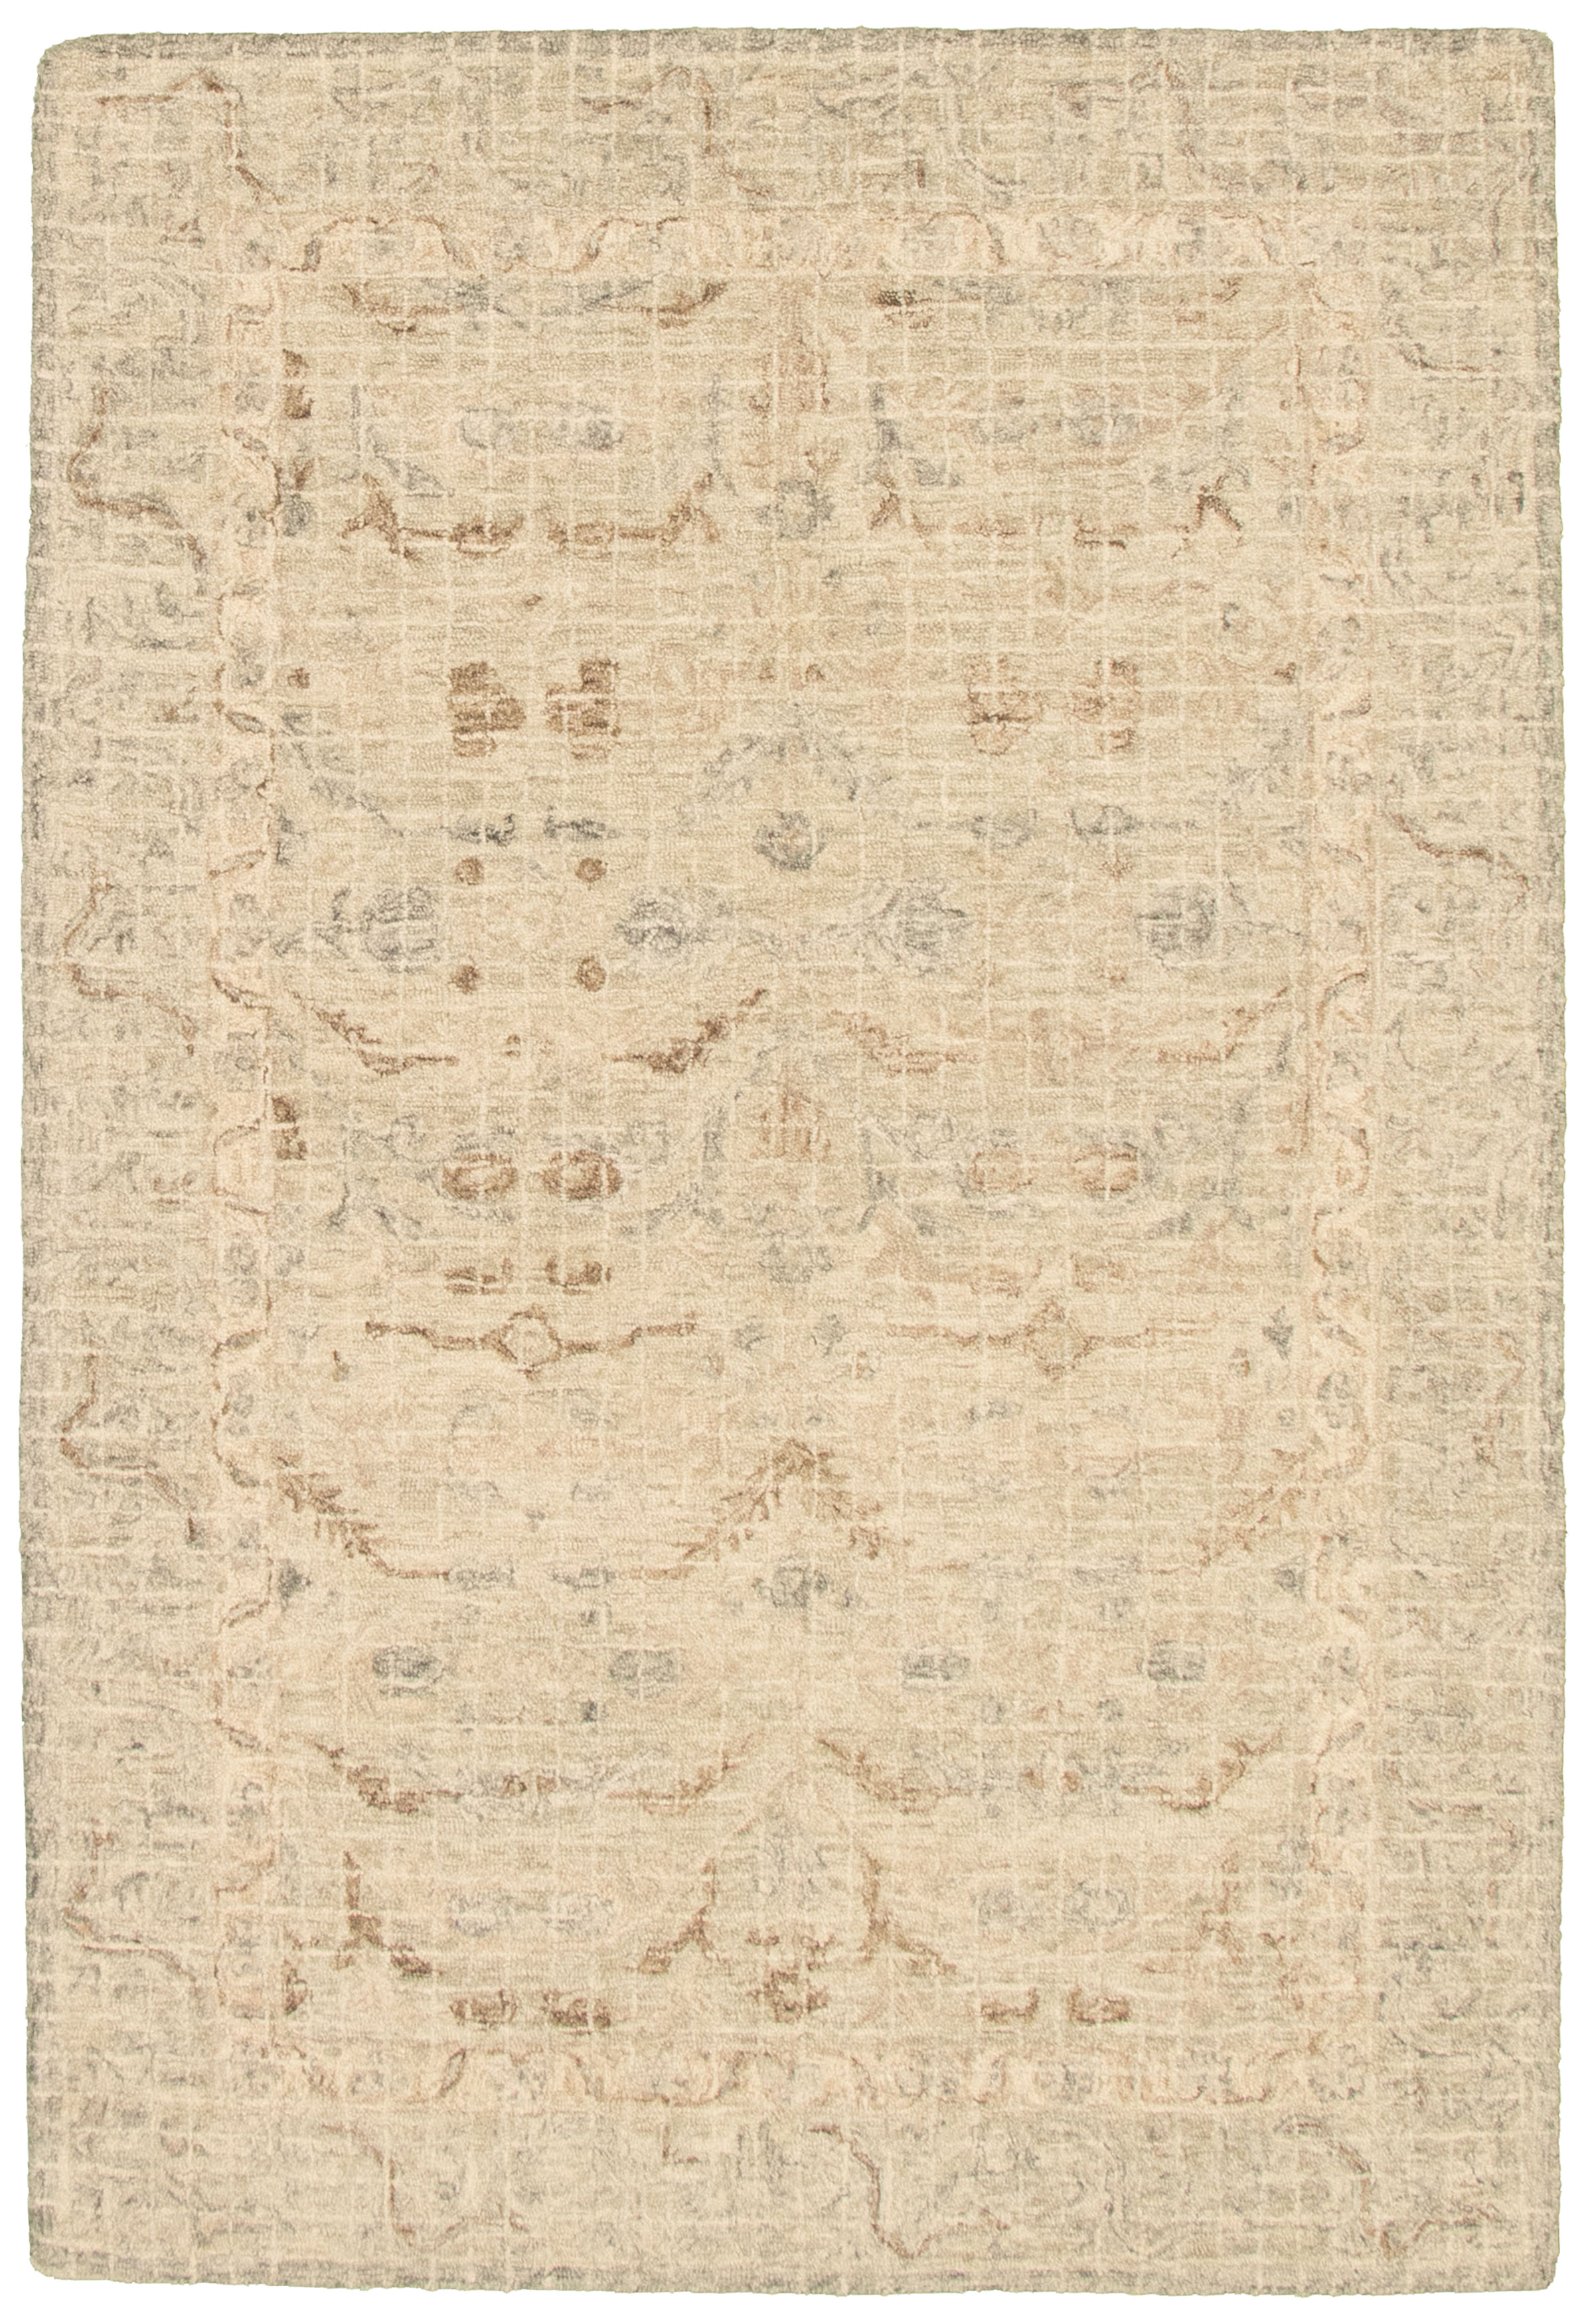 Handmade Abstract Art Ivory Wool Rug 5'0" x 7'6" Size: 5'0" x 7'6"  